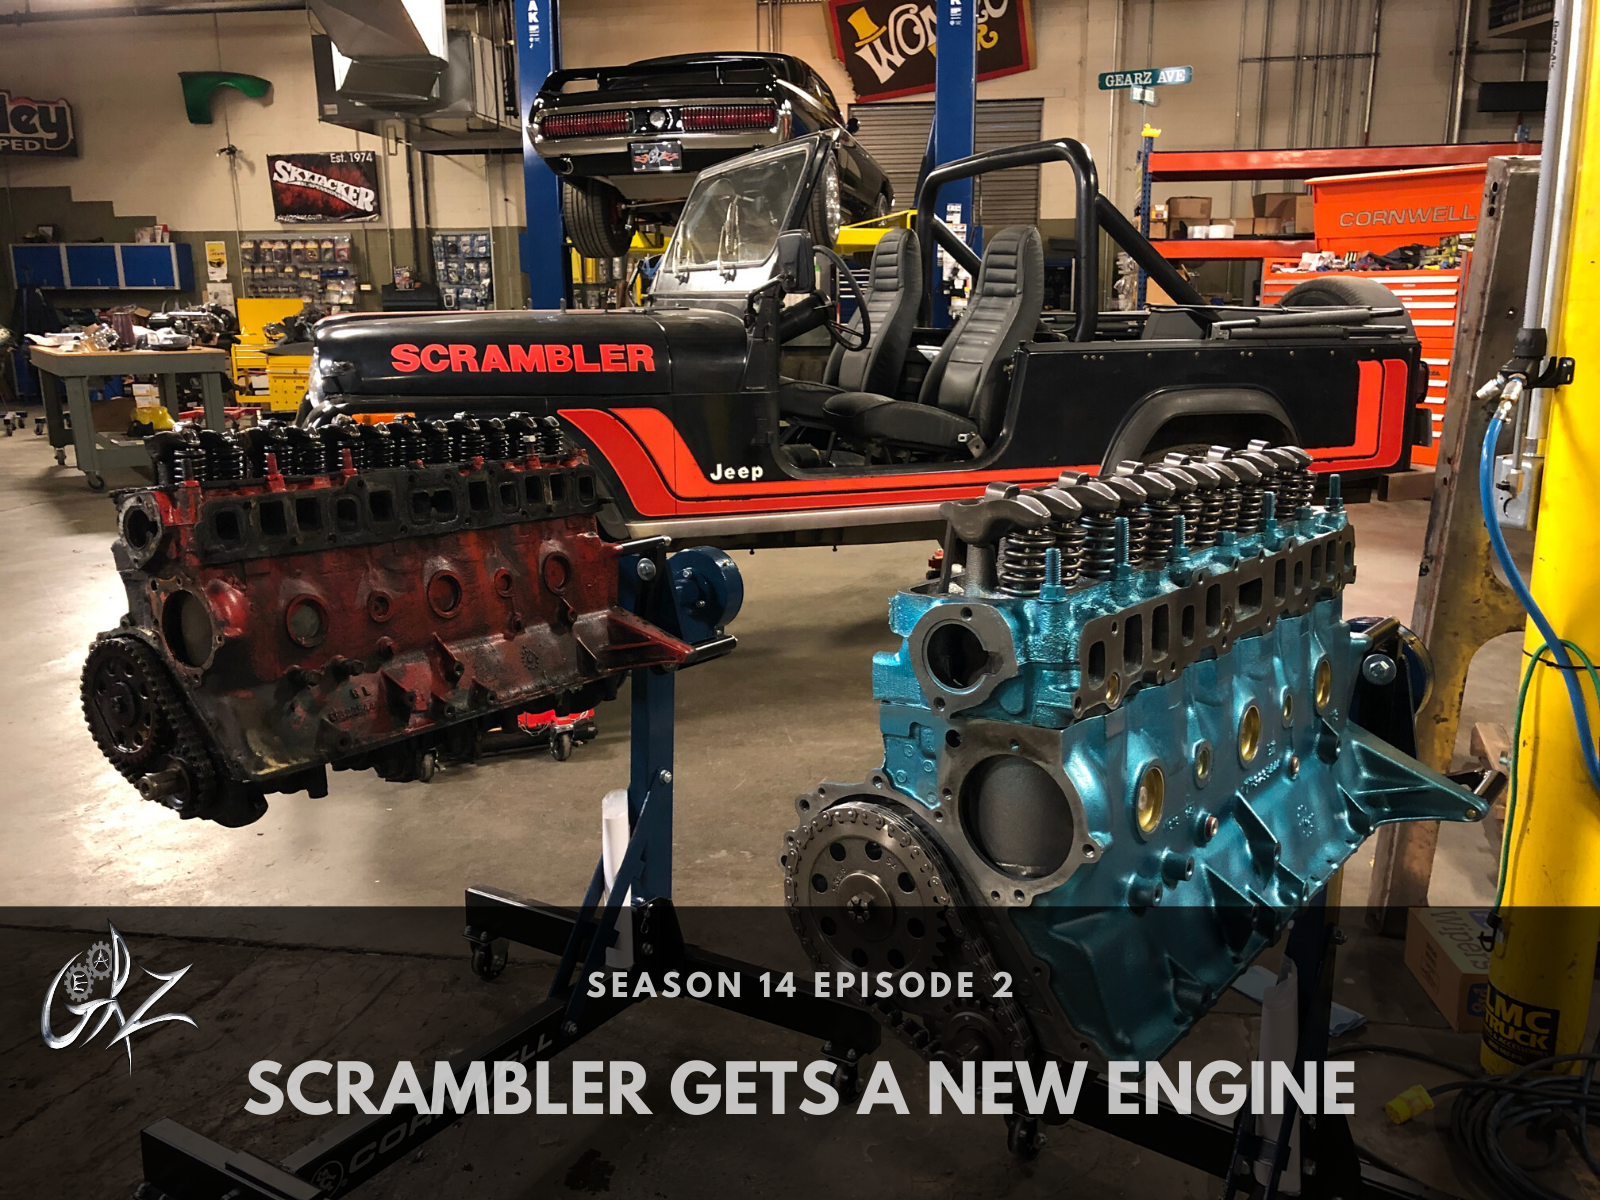 Scrambler Gets a New Engine